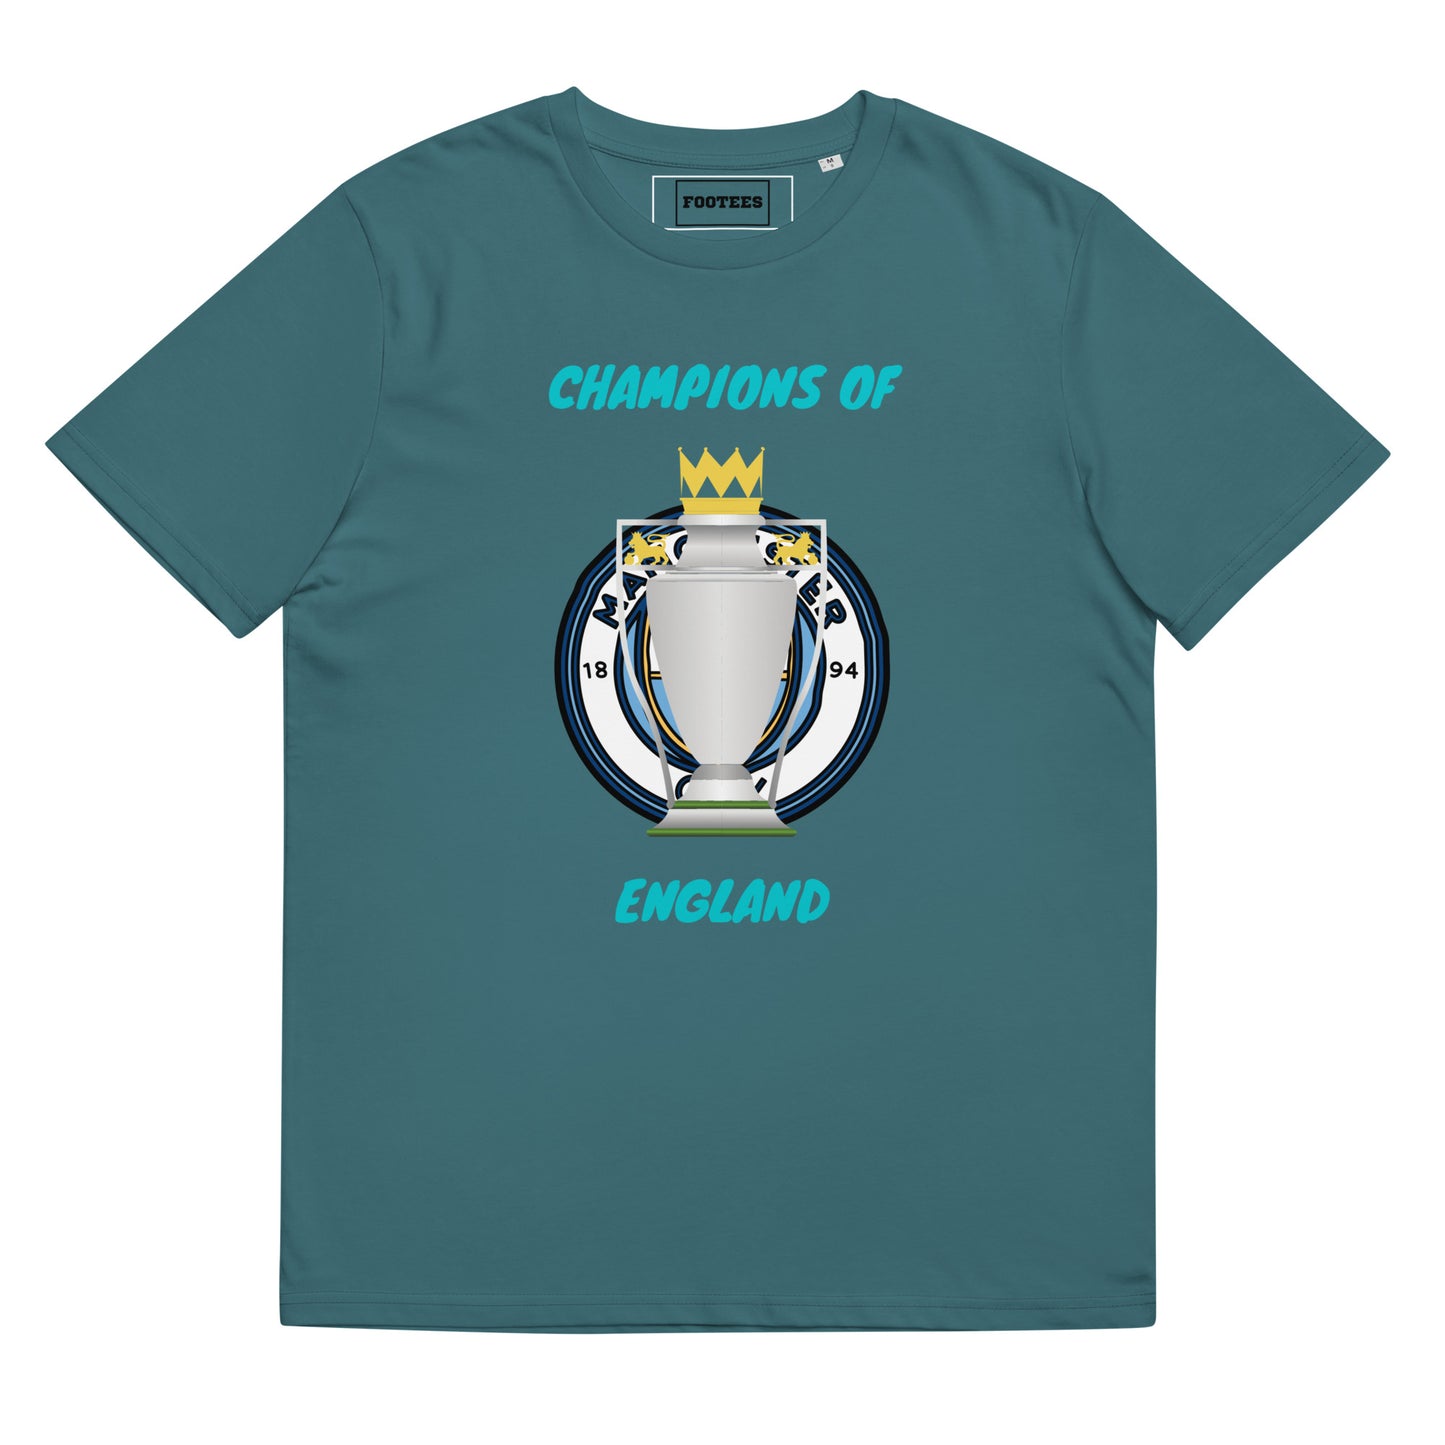 Champions of England Tee